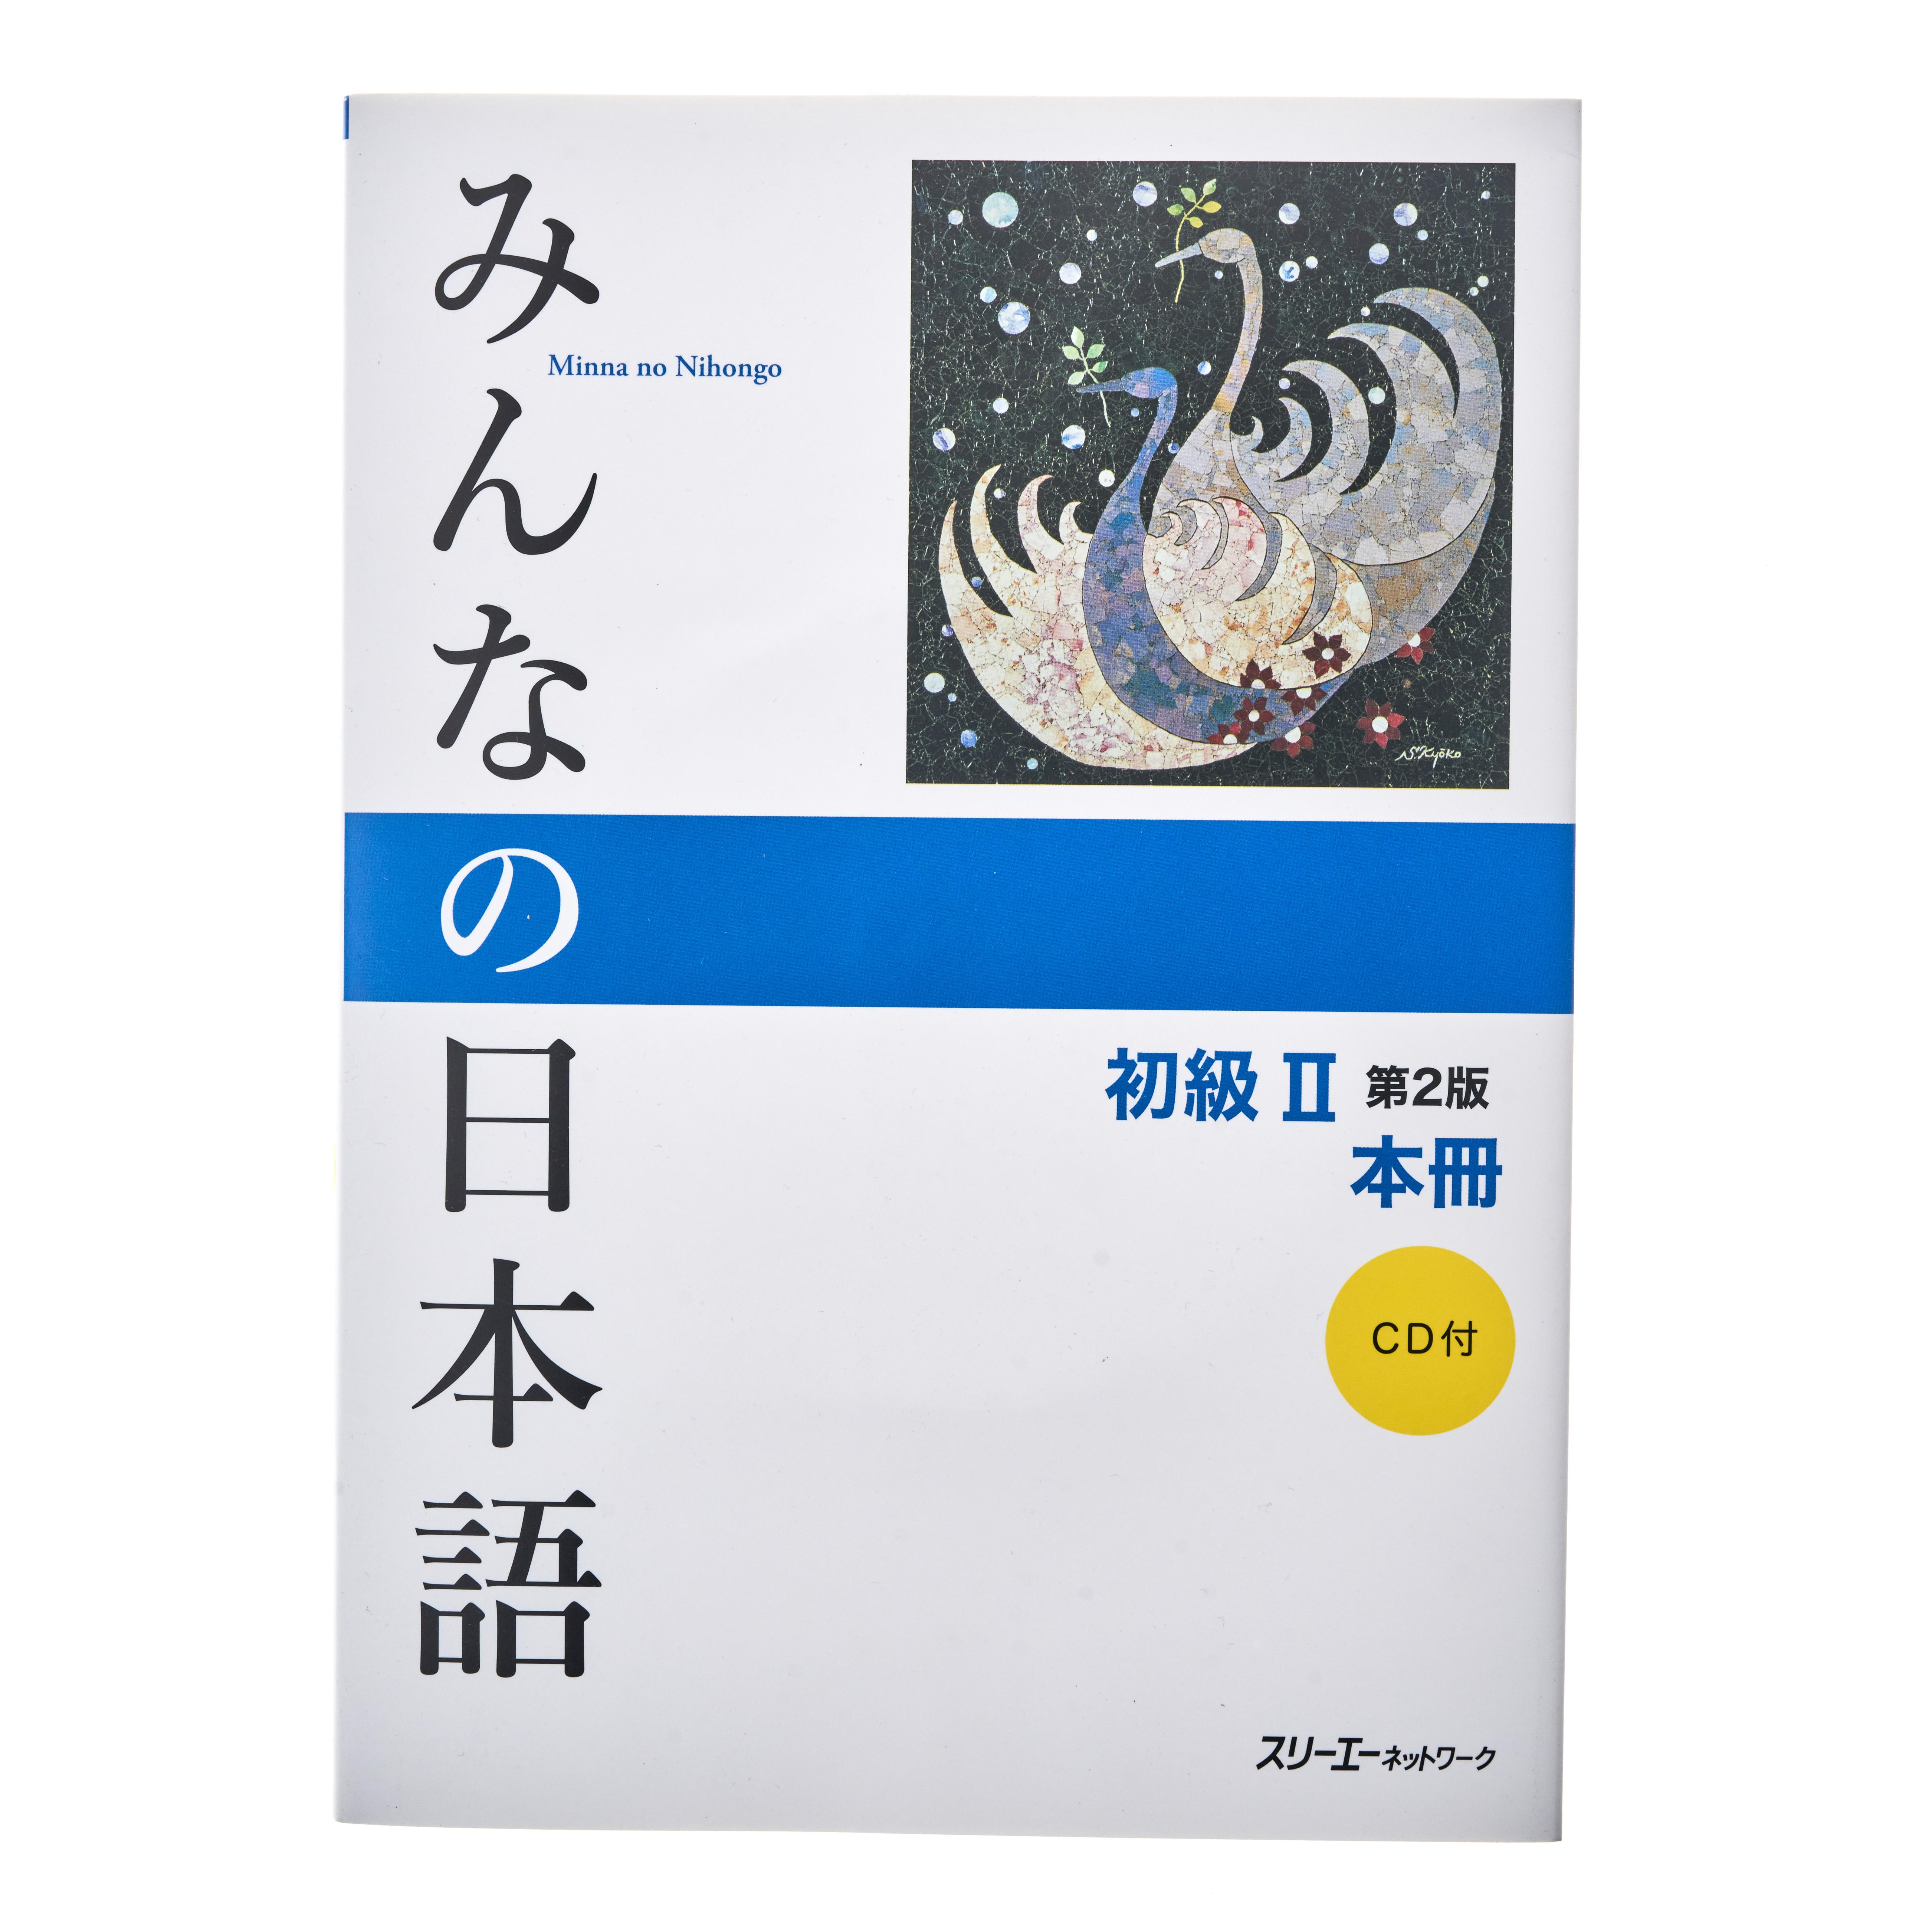 Minna no Nihongo I 2nd Edition Main Textbook - 690 g - ジャパンセンター